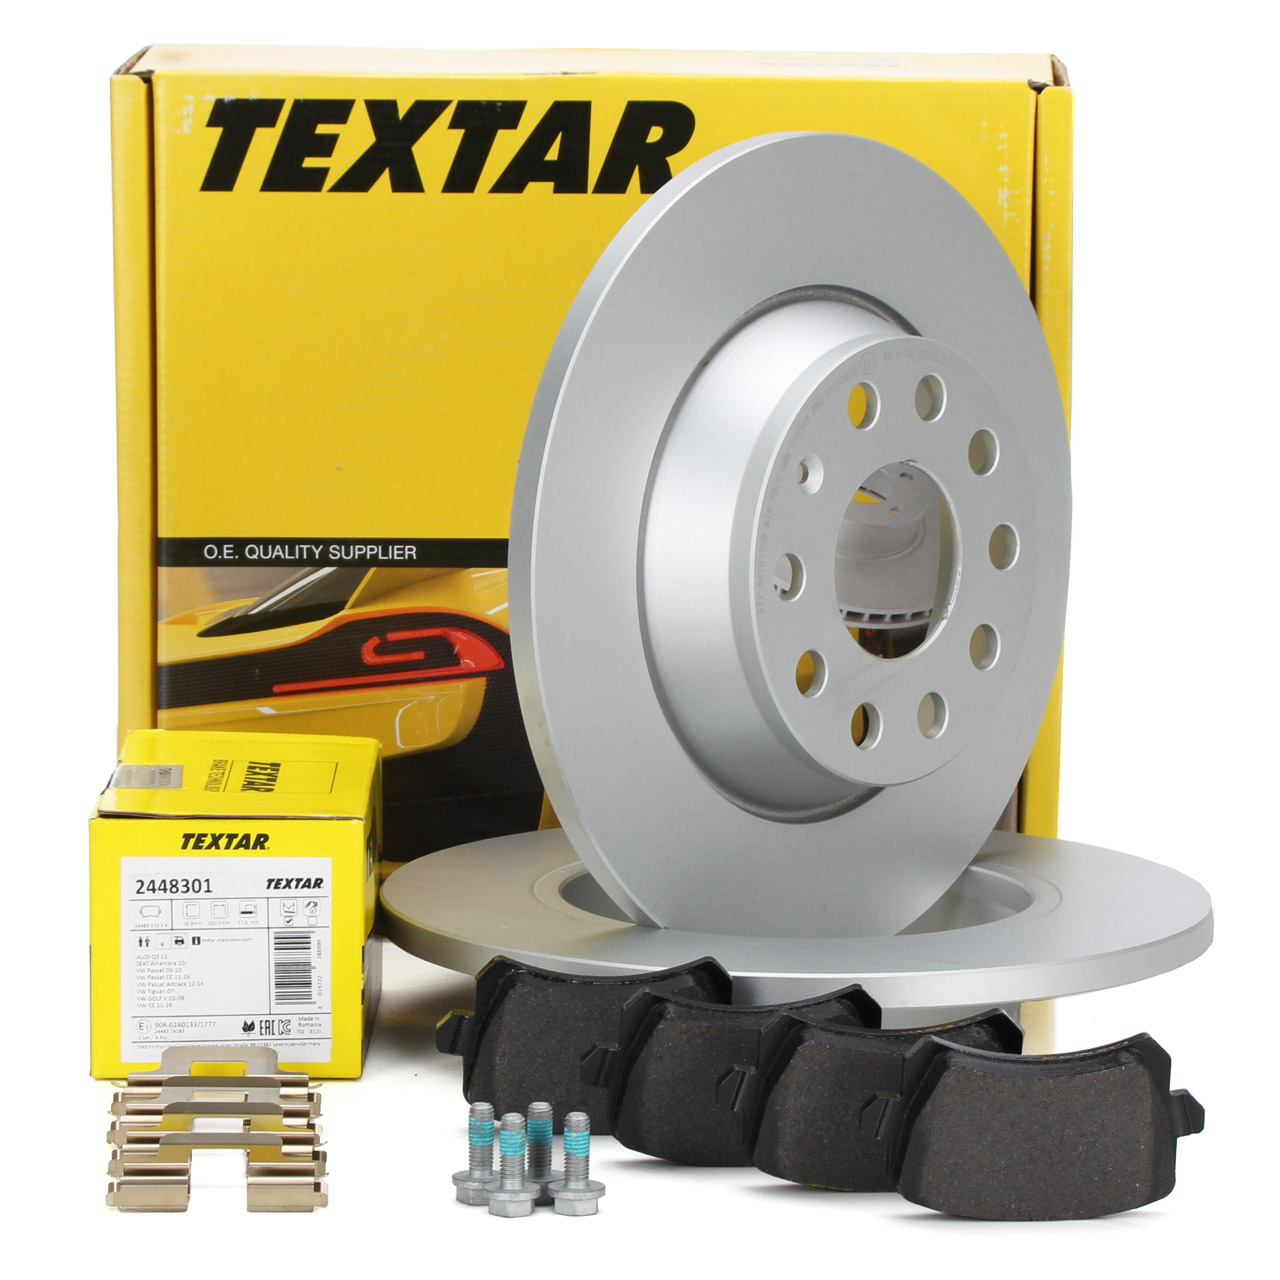 TEXTAR Bremsen Sets - 92140803, 2448301 